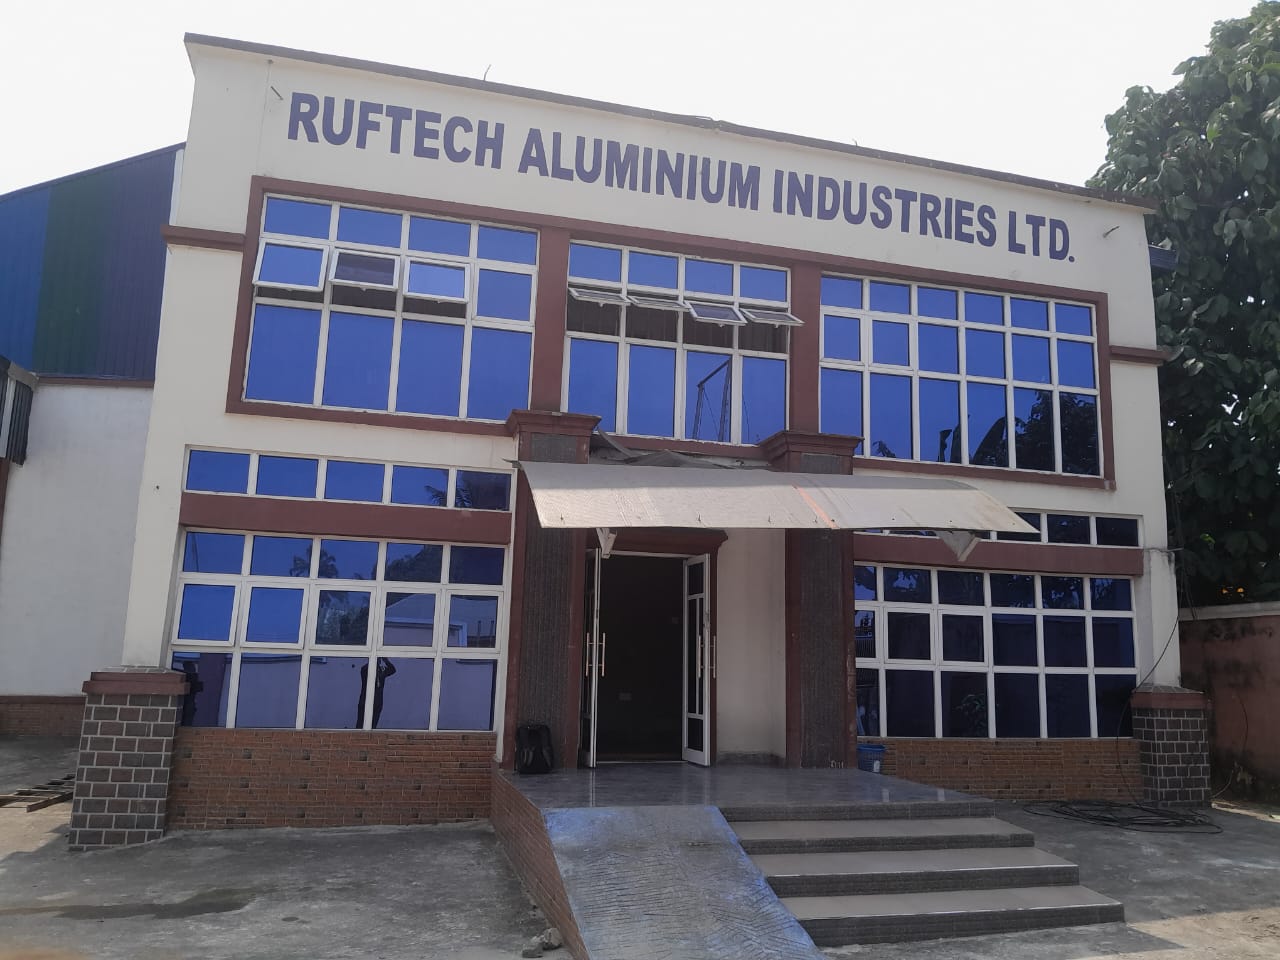 Bracing The Odds With Ruftec Aluminum